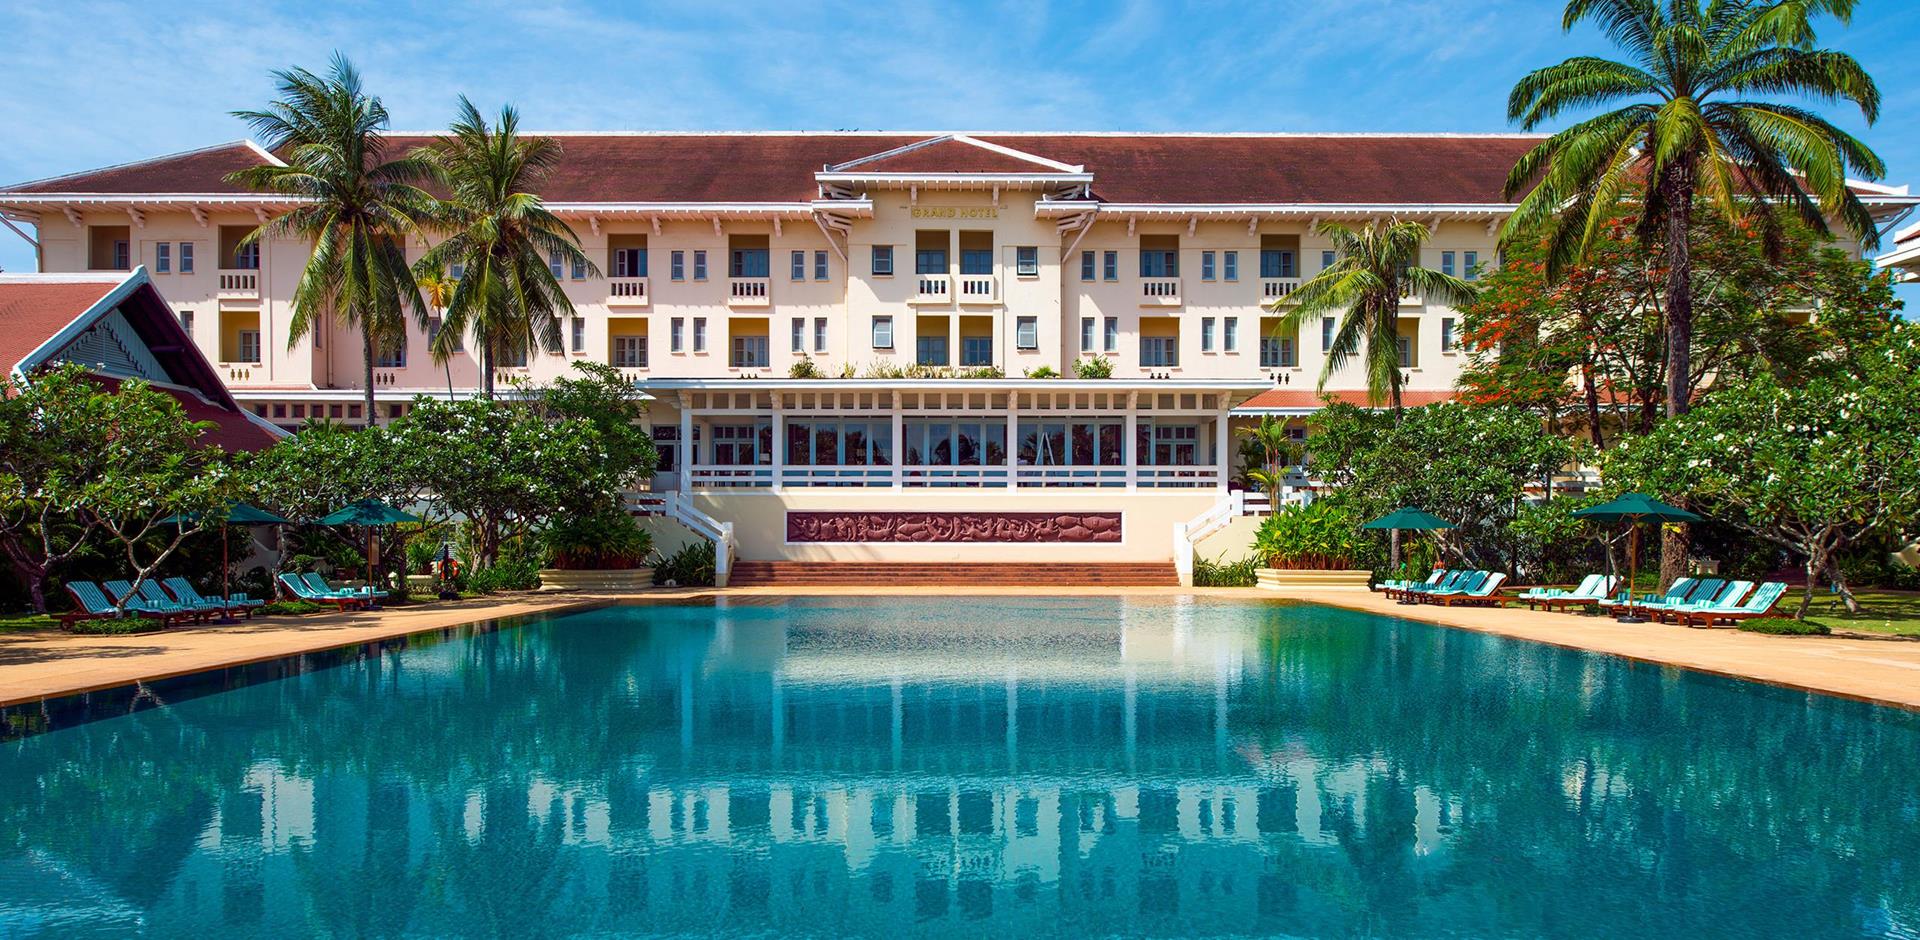 Pool and exterior, Raffles Grand Hotel d'Angkor, Cambodia, A&K